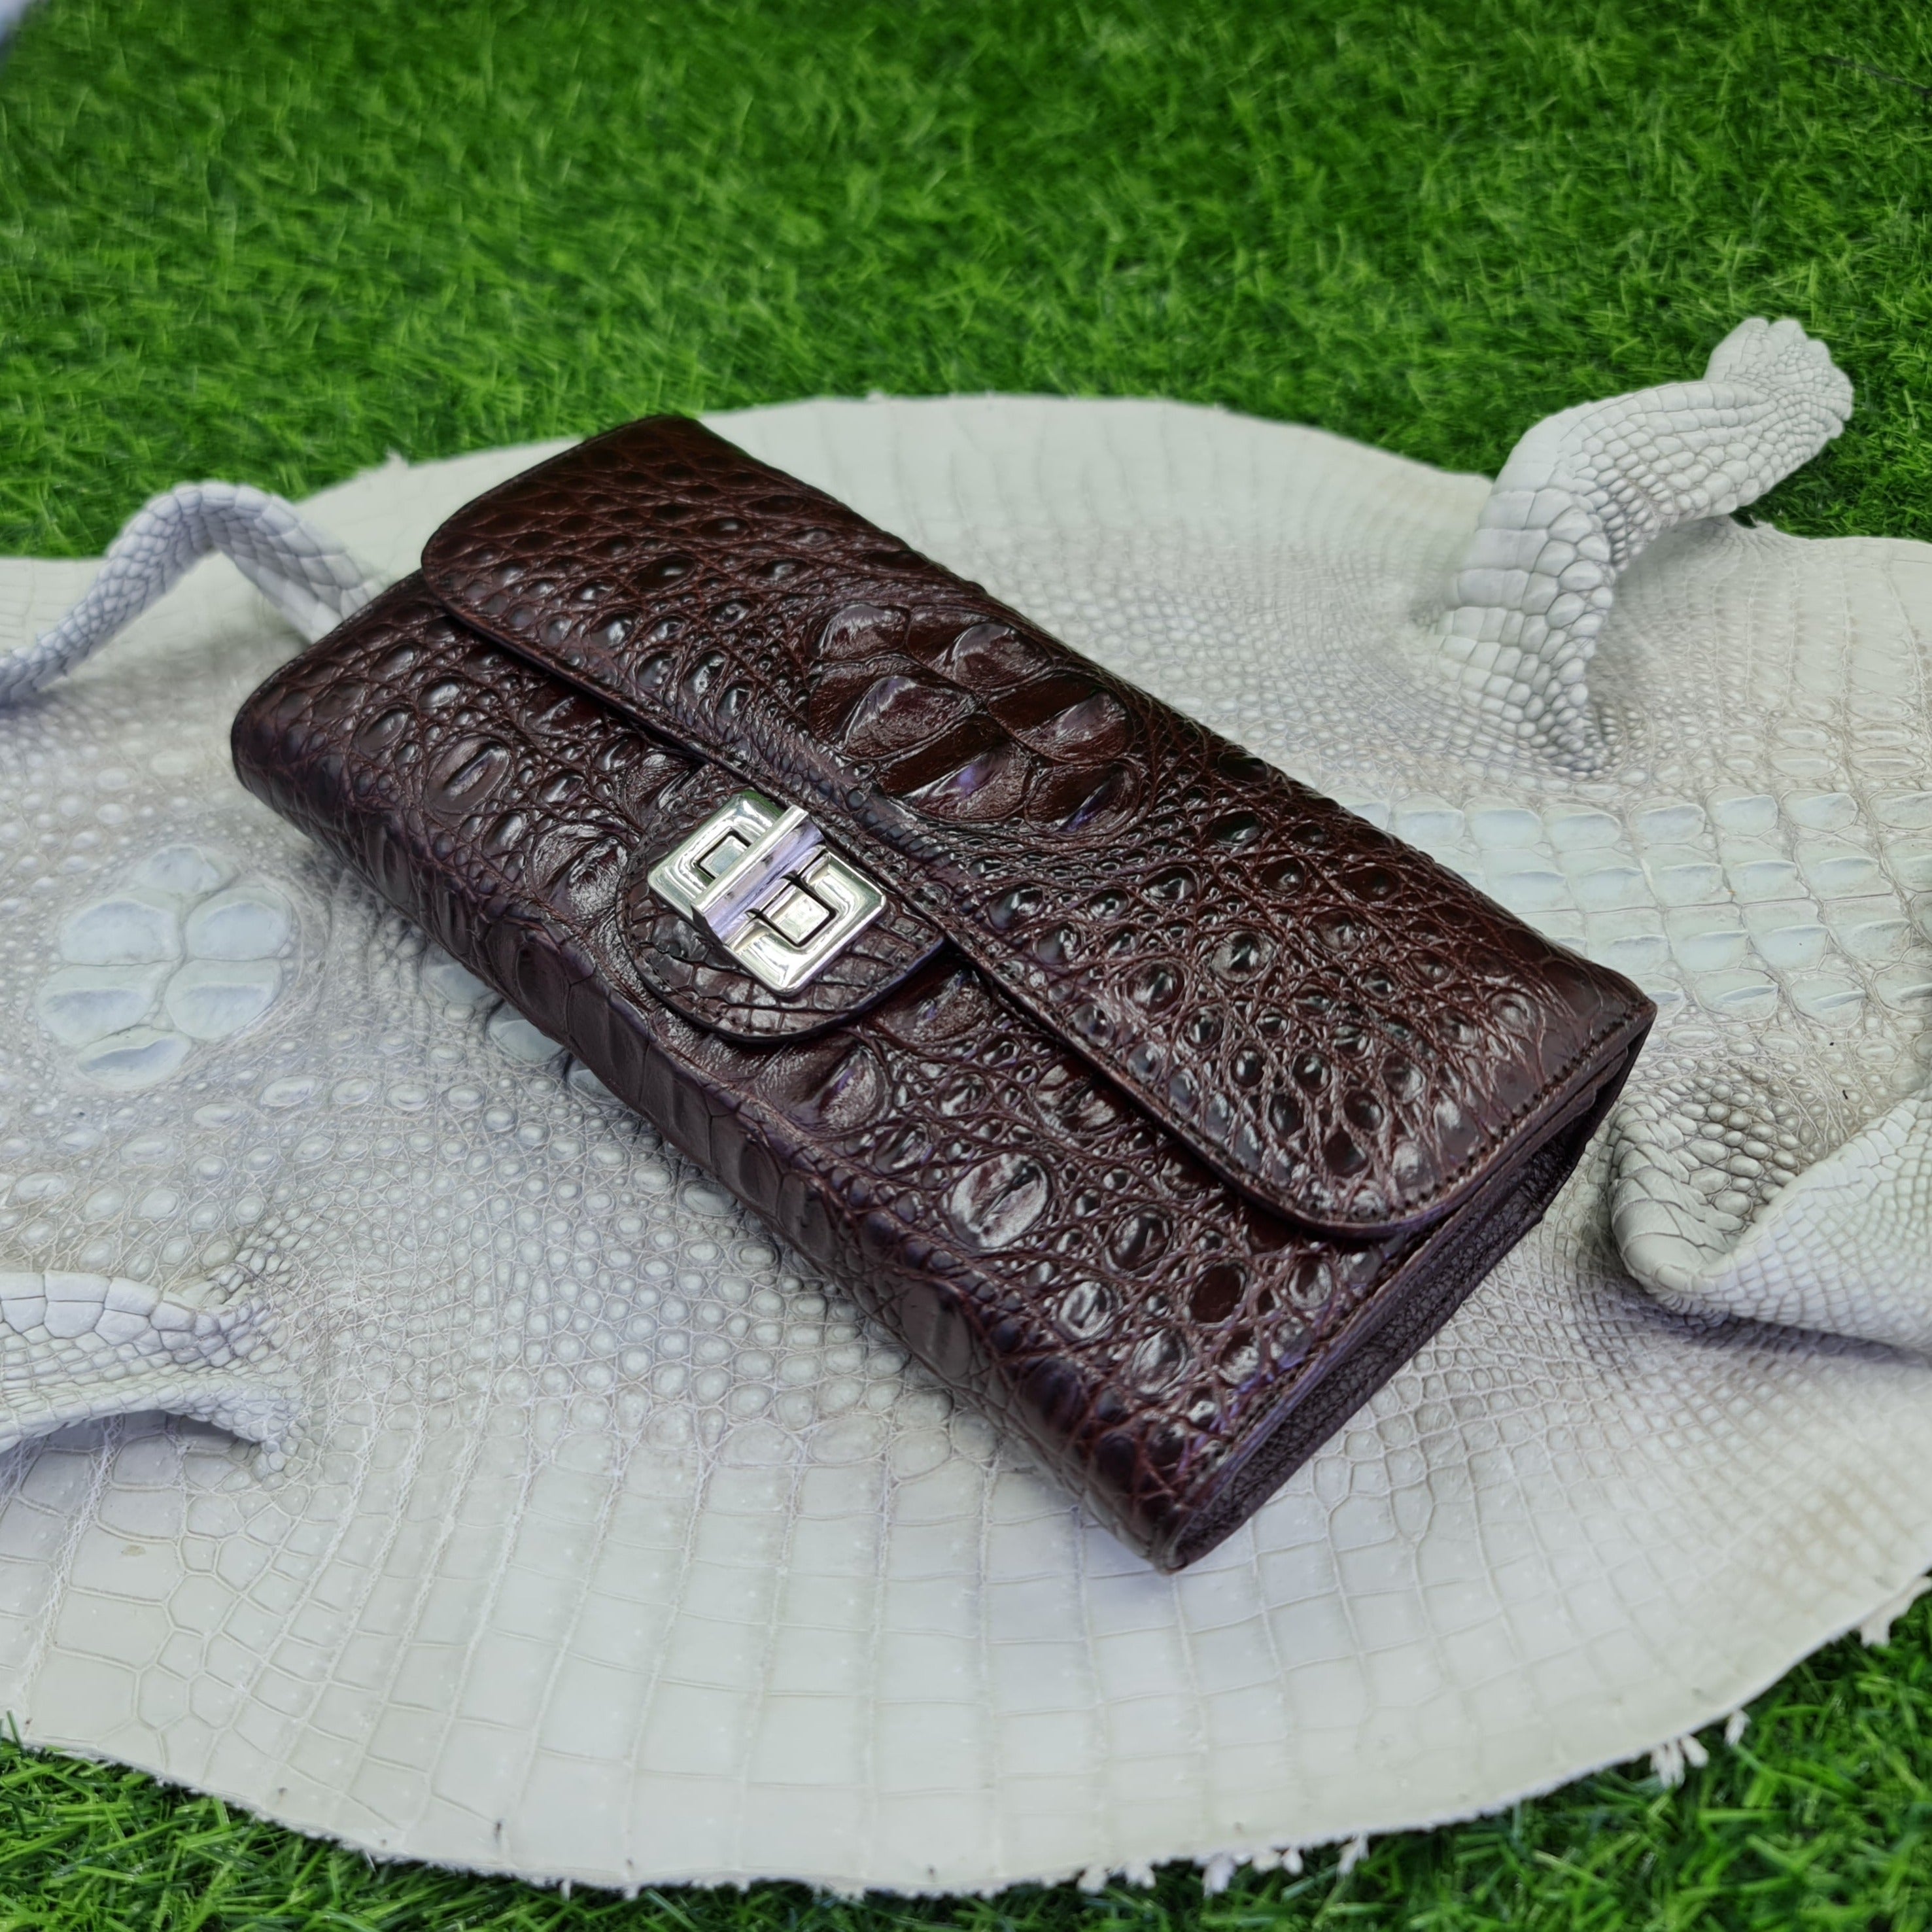 Womens Leather Alligator Handbag Handmade Luxury Leather Bag - Work Bag Women - Brown Leather Satchel Purse XACH-10 - Vinacreations